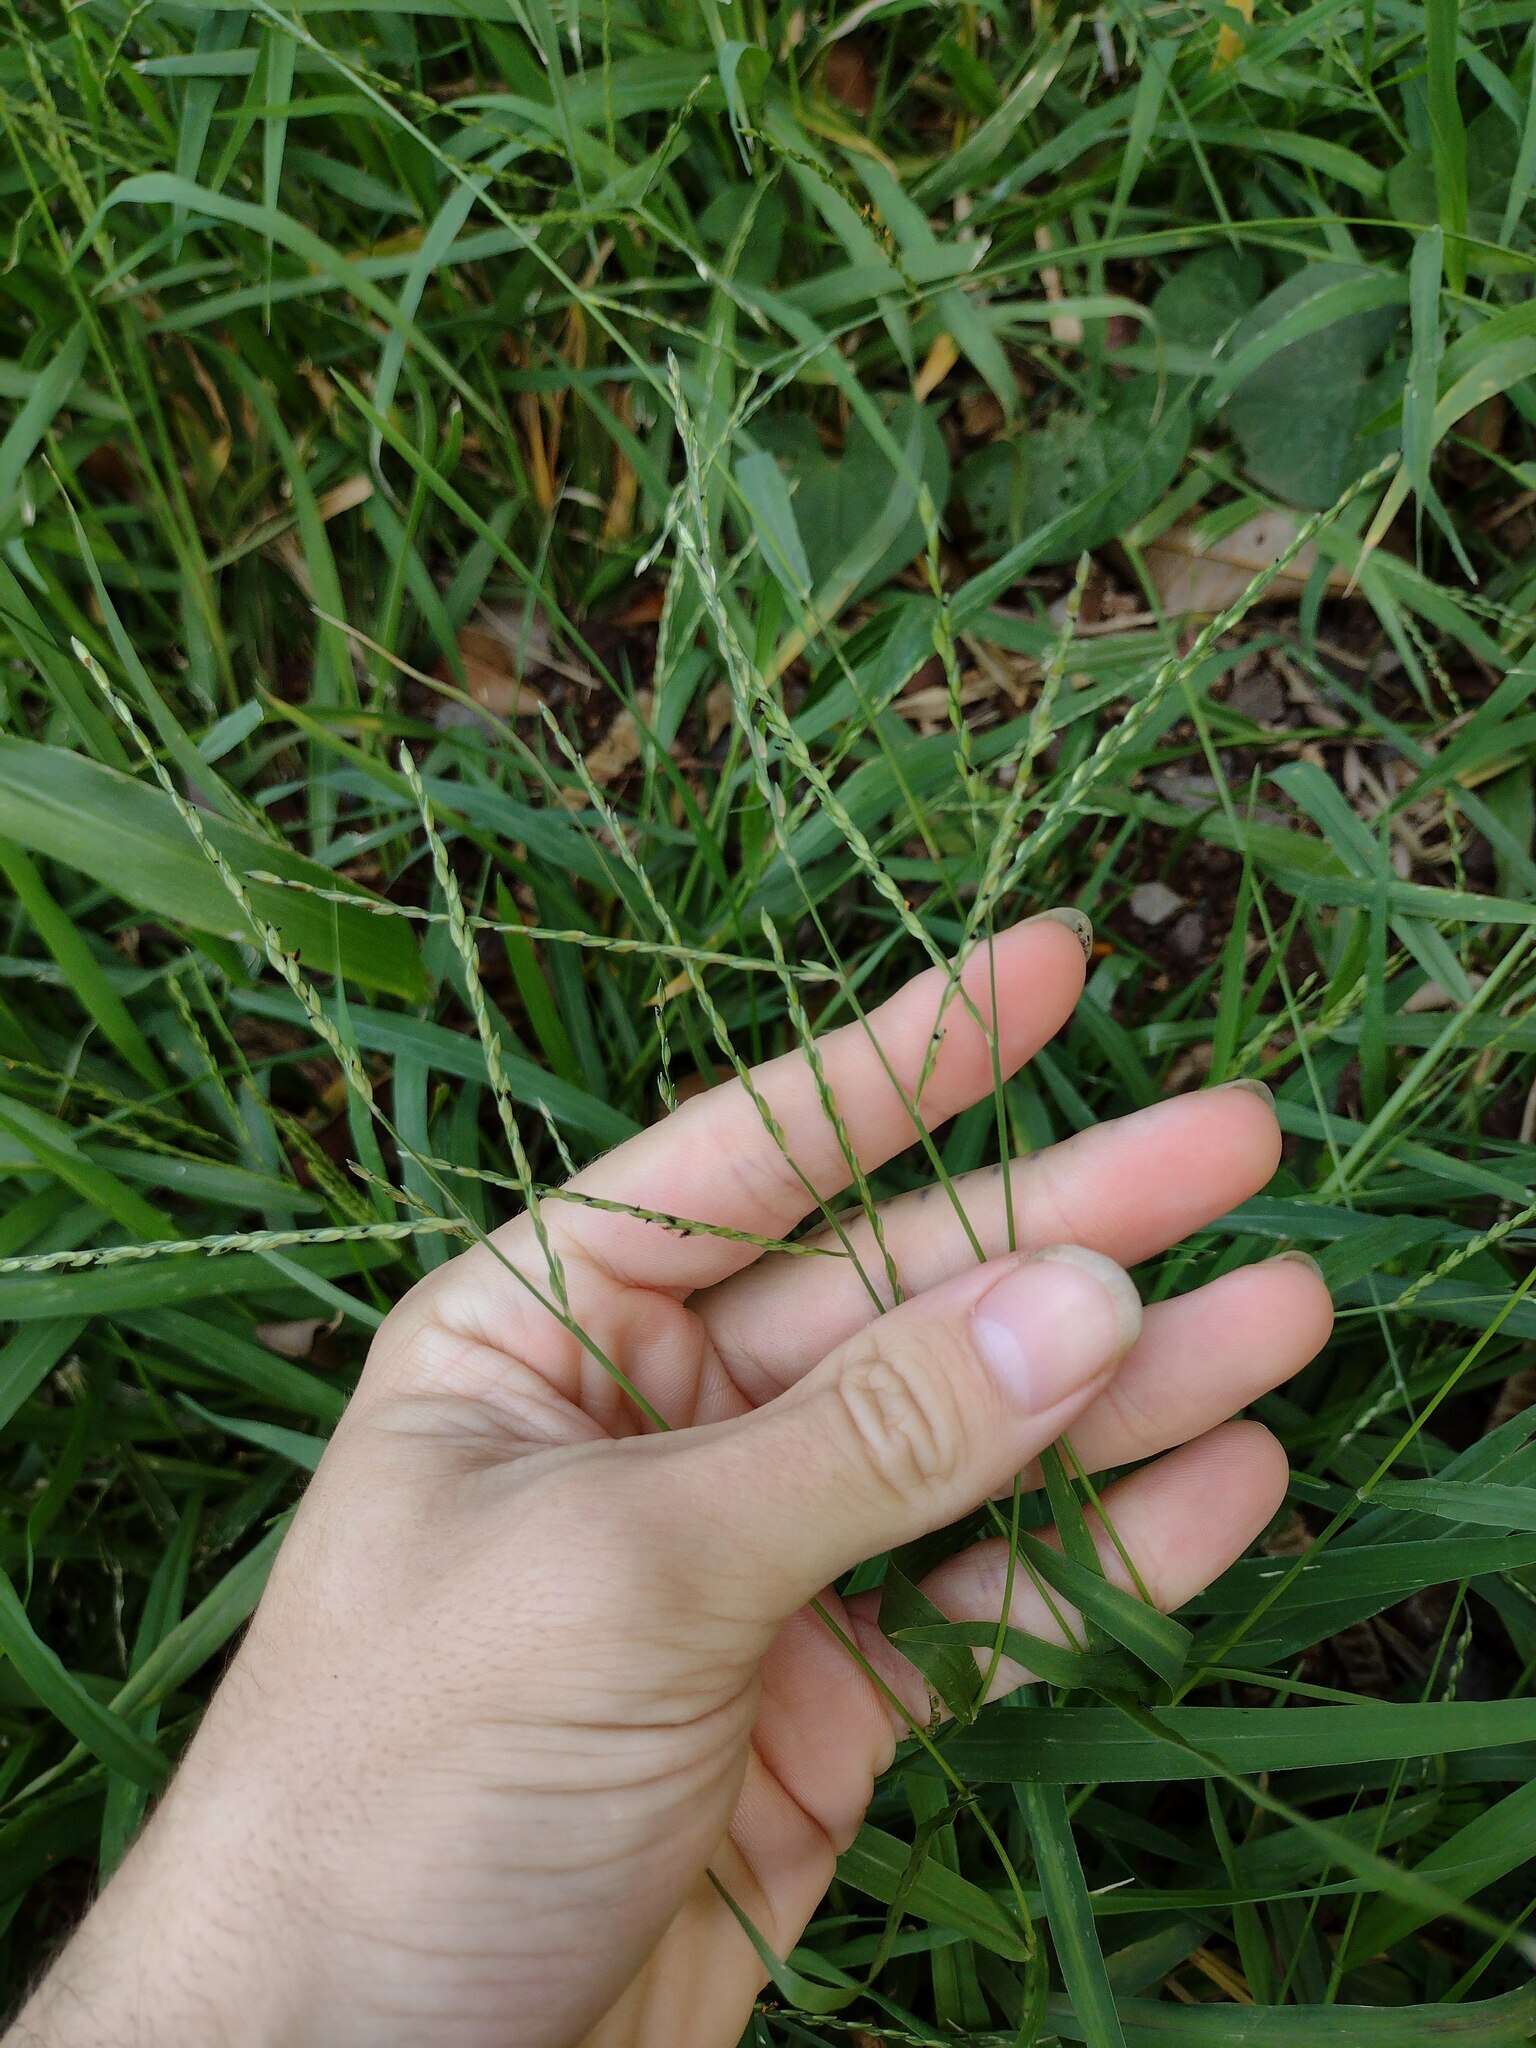 Image of Thurston grass